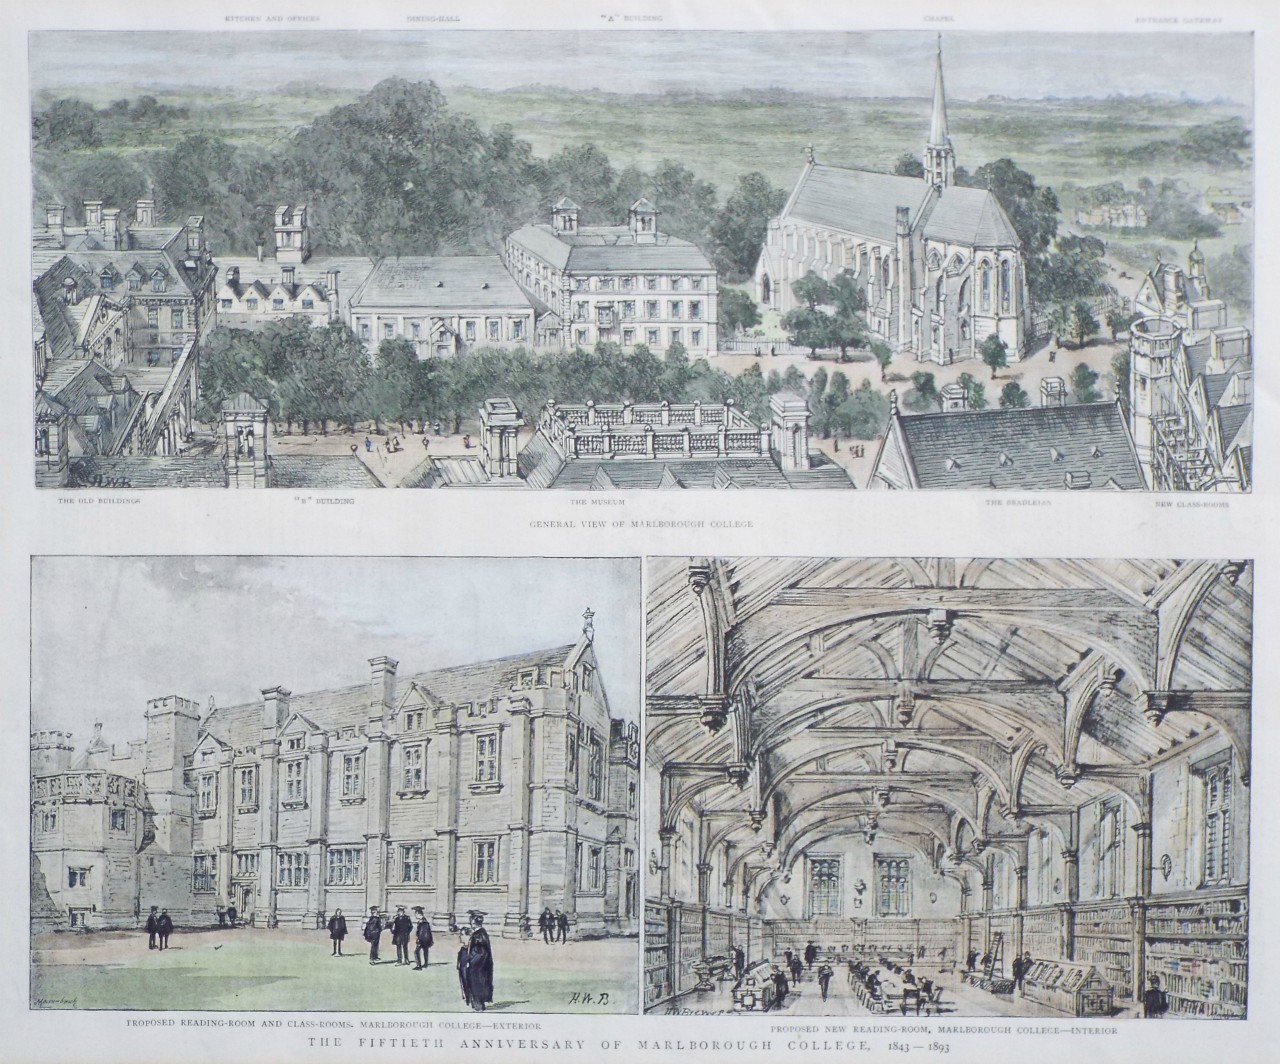 Wood - The Fiftieth Anniversary of Marlborough College, 1843 - 1893